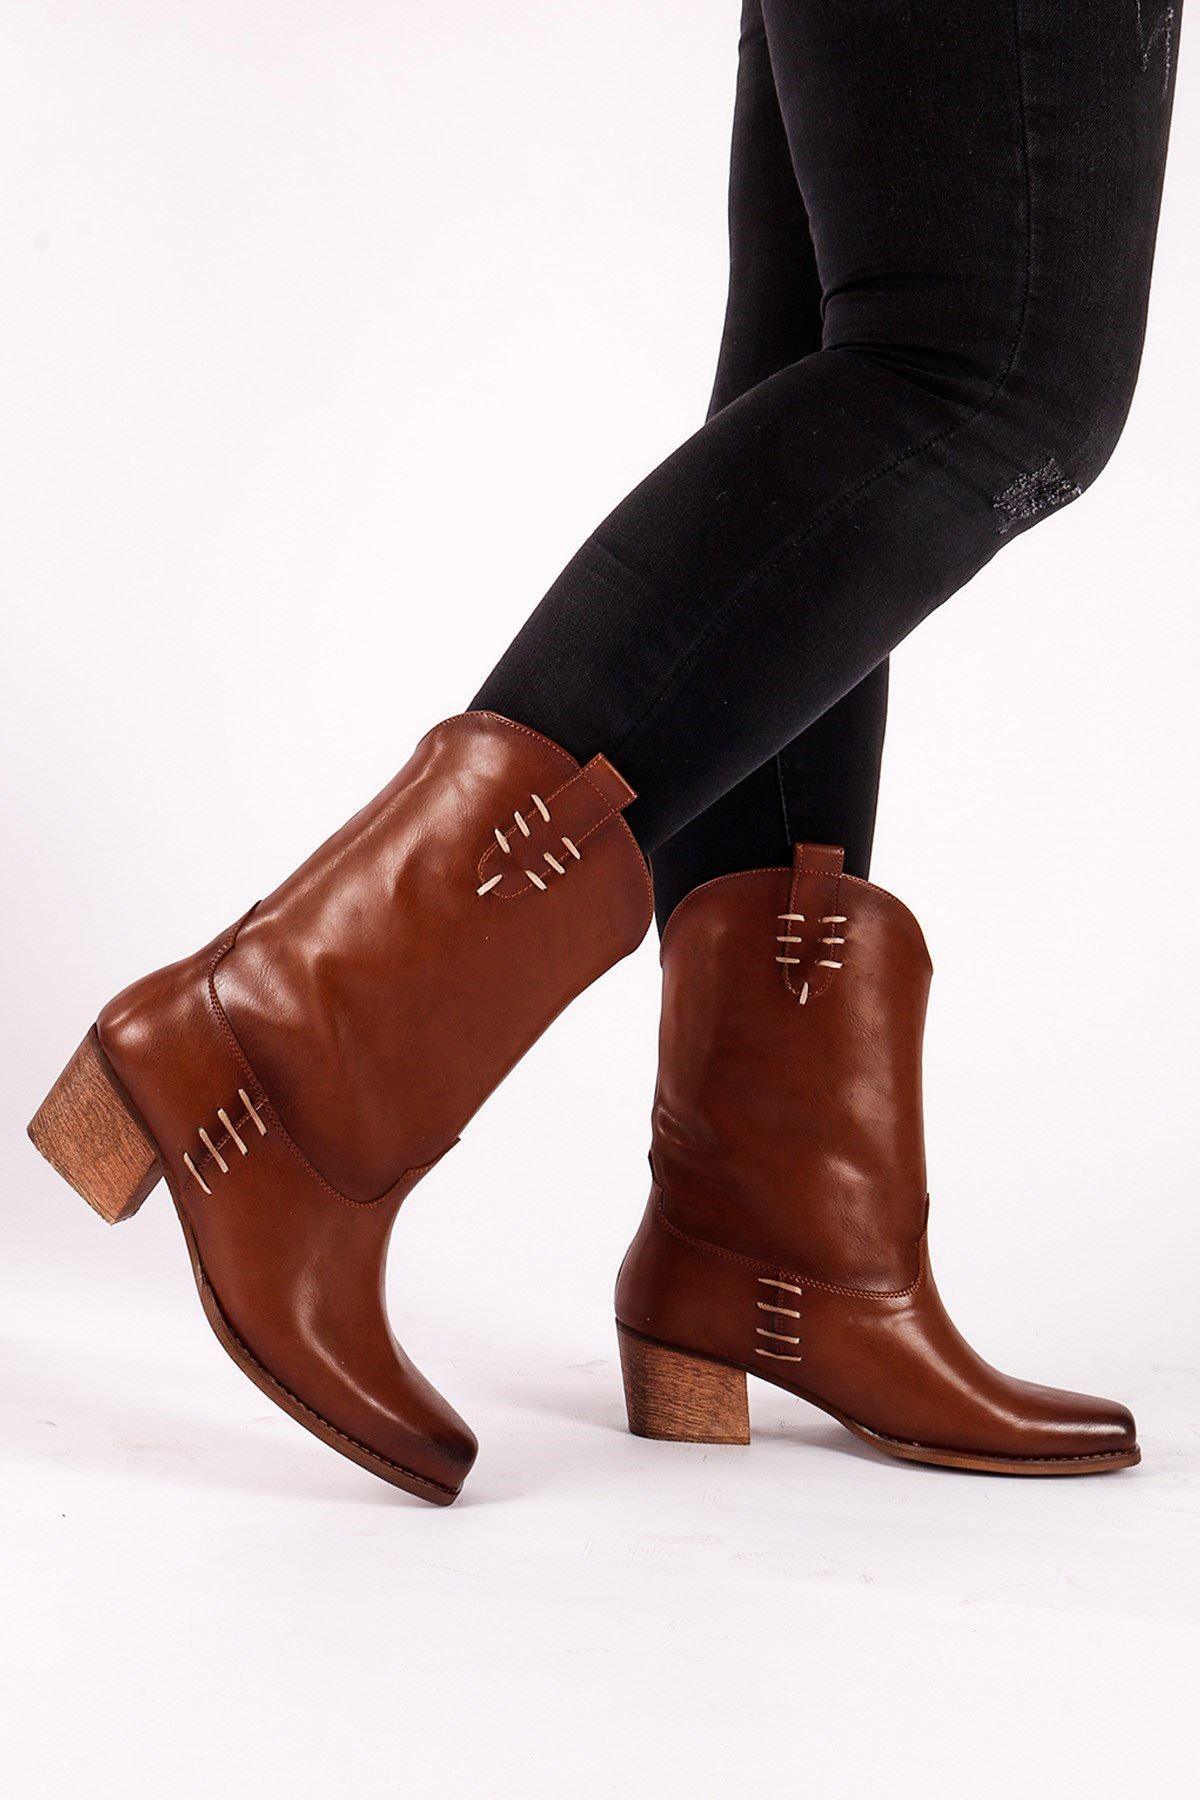 Agatha Women's Tan Skin Boots - STREET MODE ™